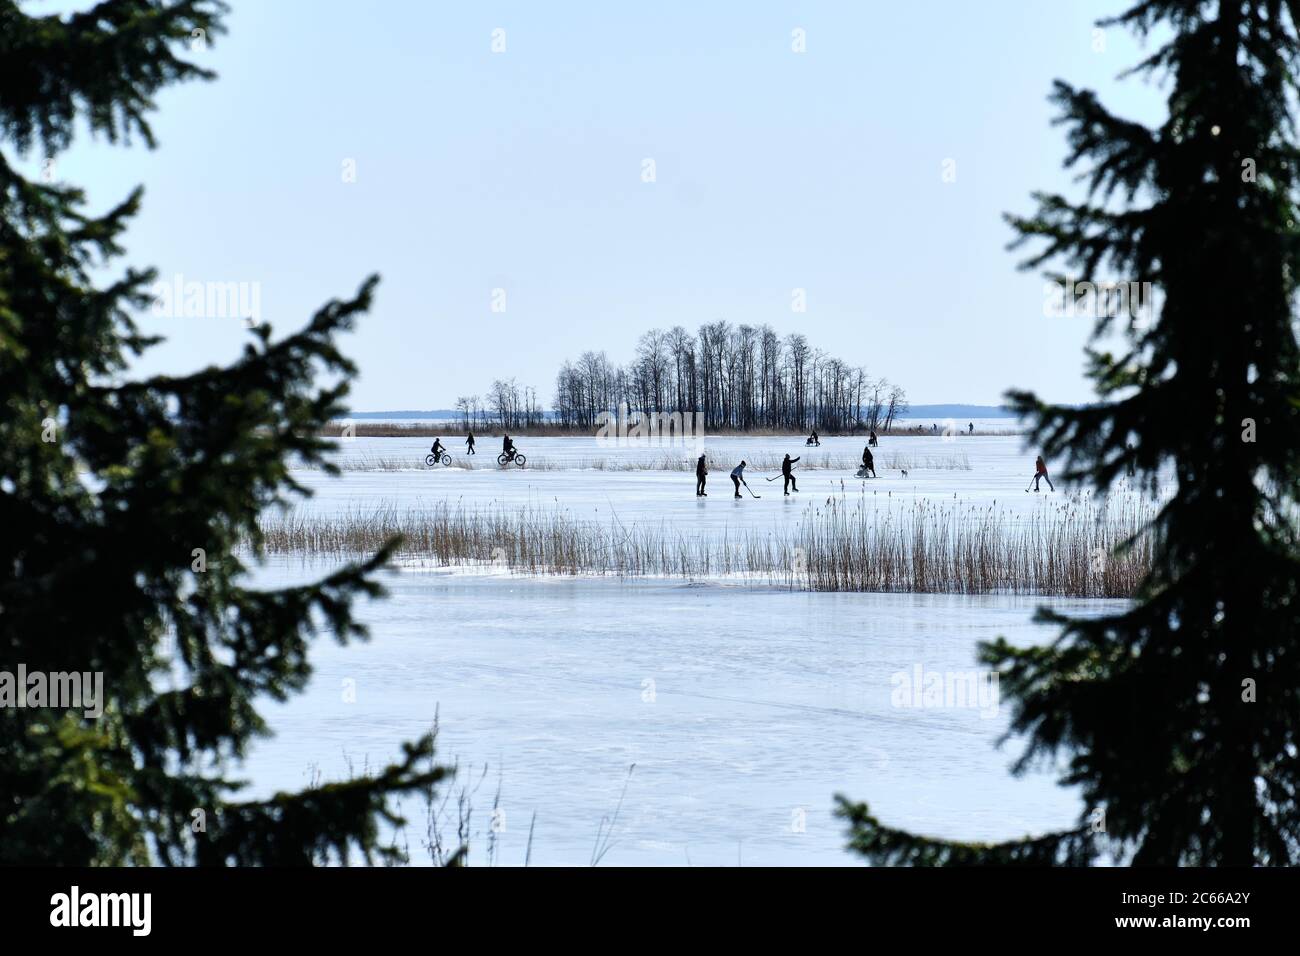 Weekend on the ice-covered lake in Joensuu, Finland. People ride bikes, play hockey, walking on the lake ice. Stock Photo